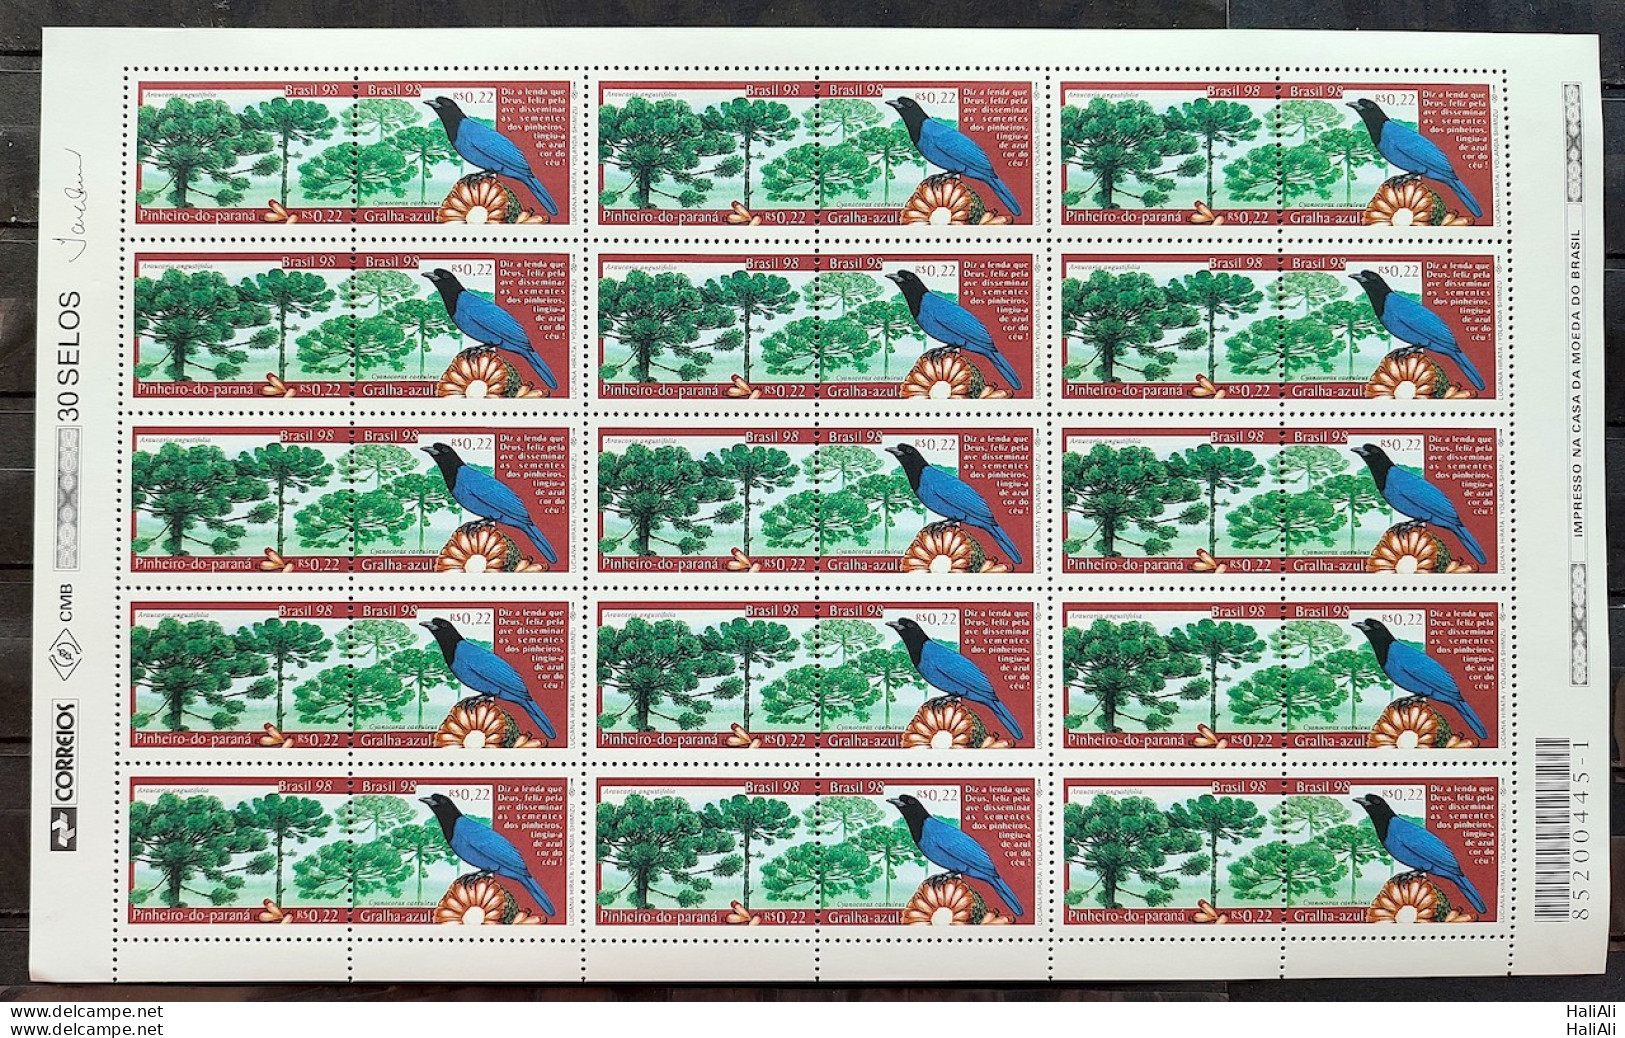 C 2138 Brazil Stamp Pinheiro Do Parana Blue Jay 1998 Sheet - Unused Stamps